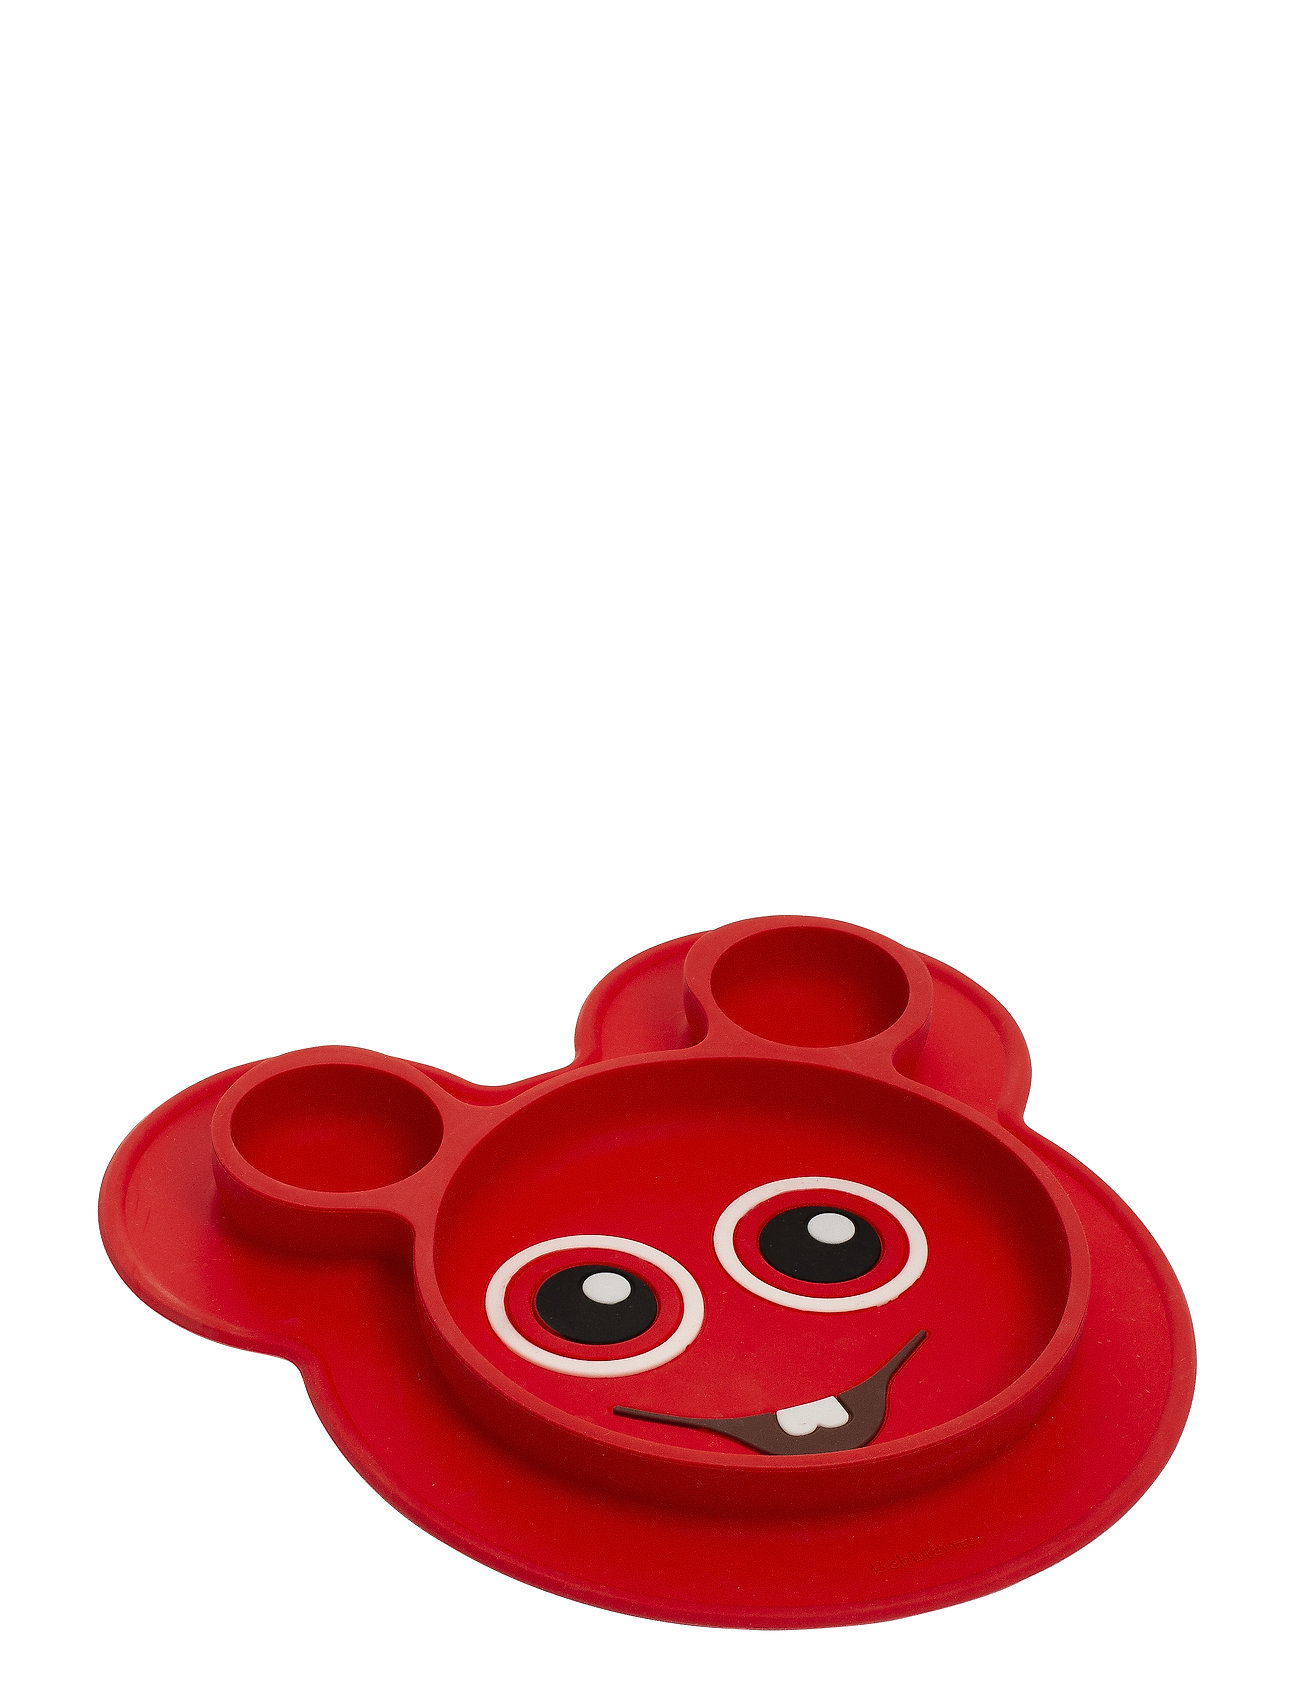 Babblarna- Silic Plate Bobbo Home Meal Time Plates & Bowls Plates Red Babblarna